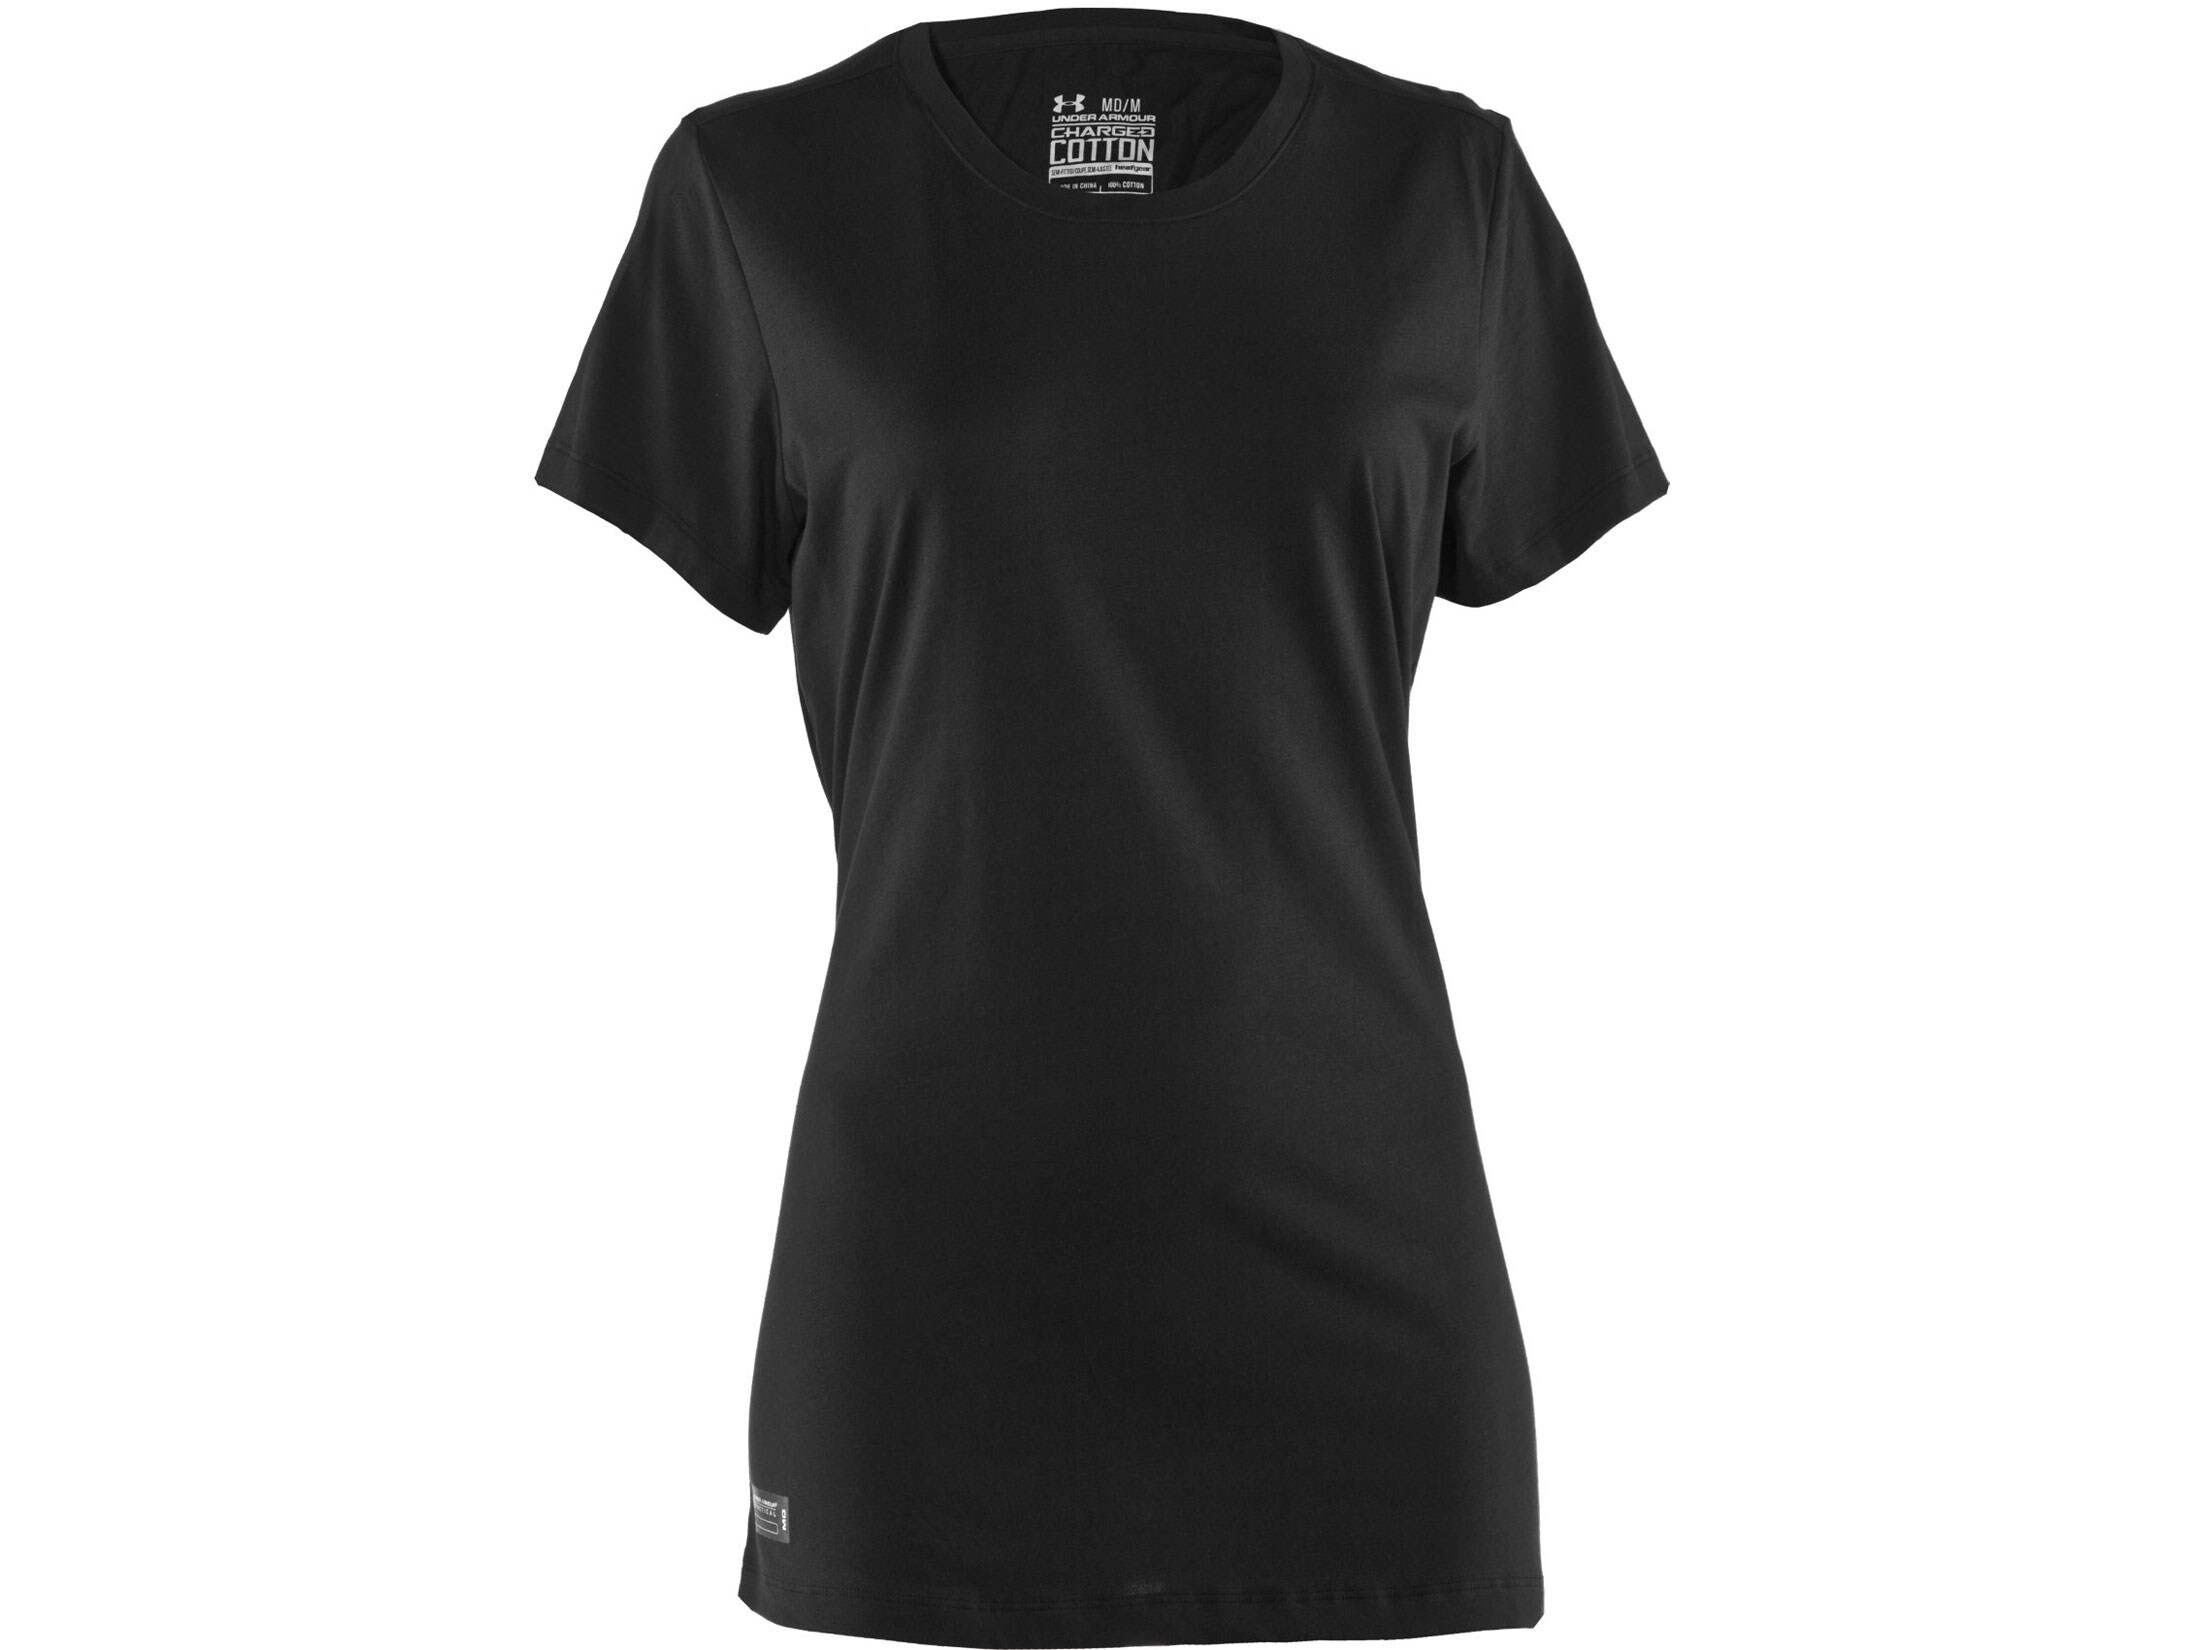 Under Armour Women's UA Tac Charged Cotton T-Shirt Short Sleeve Cotton